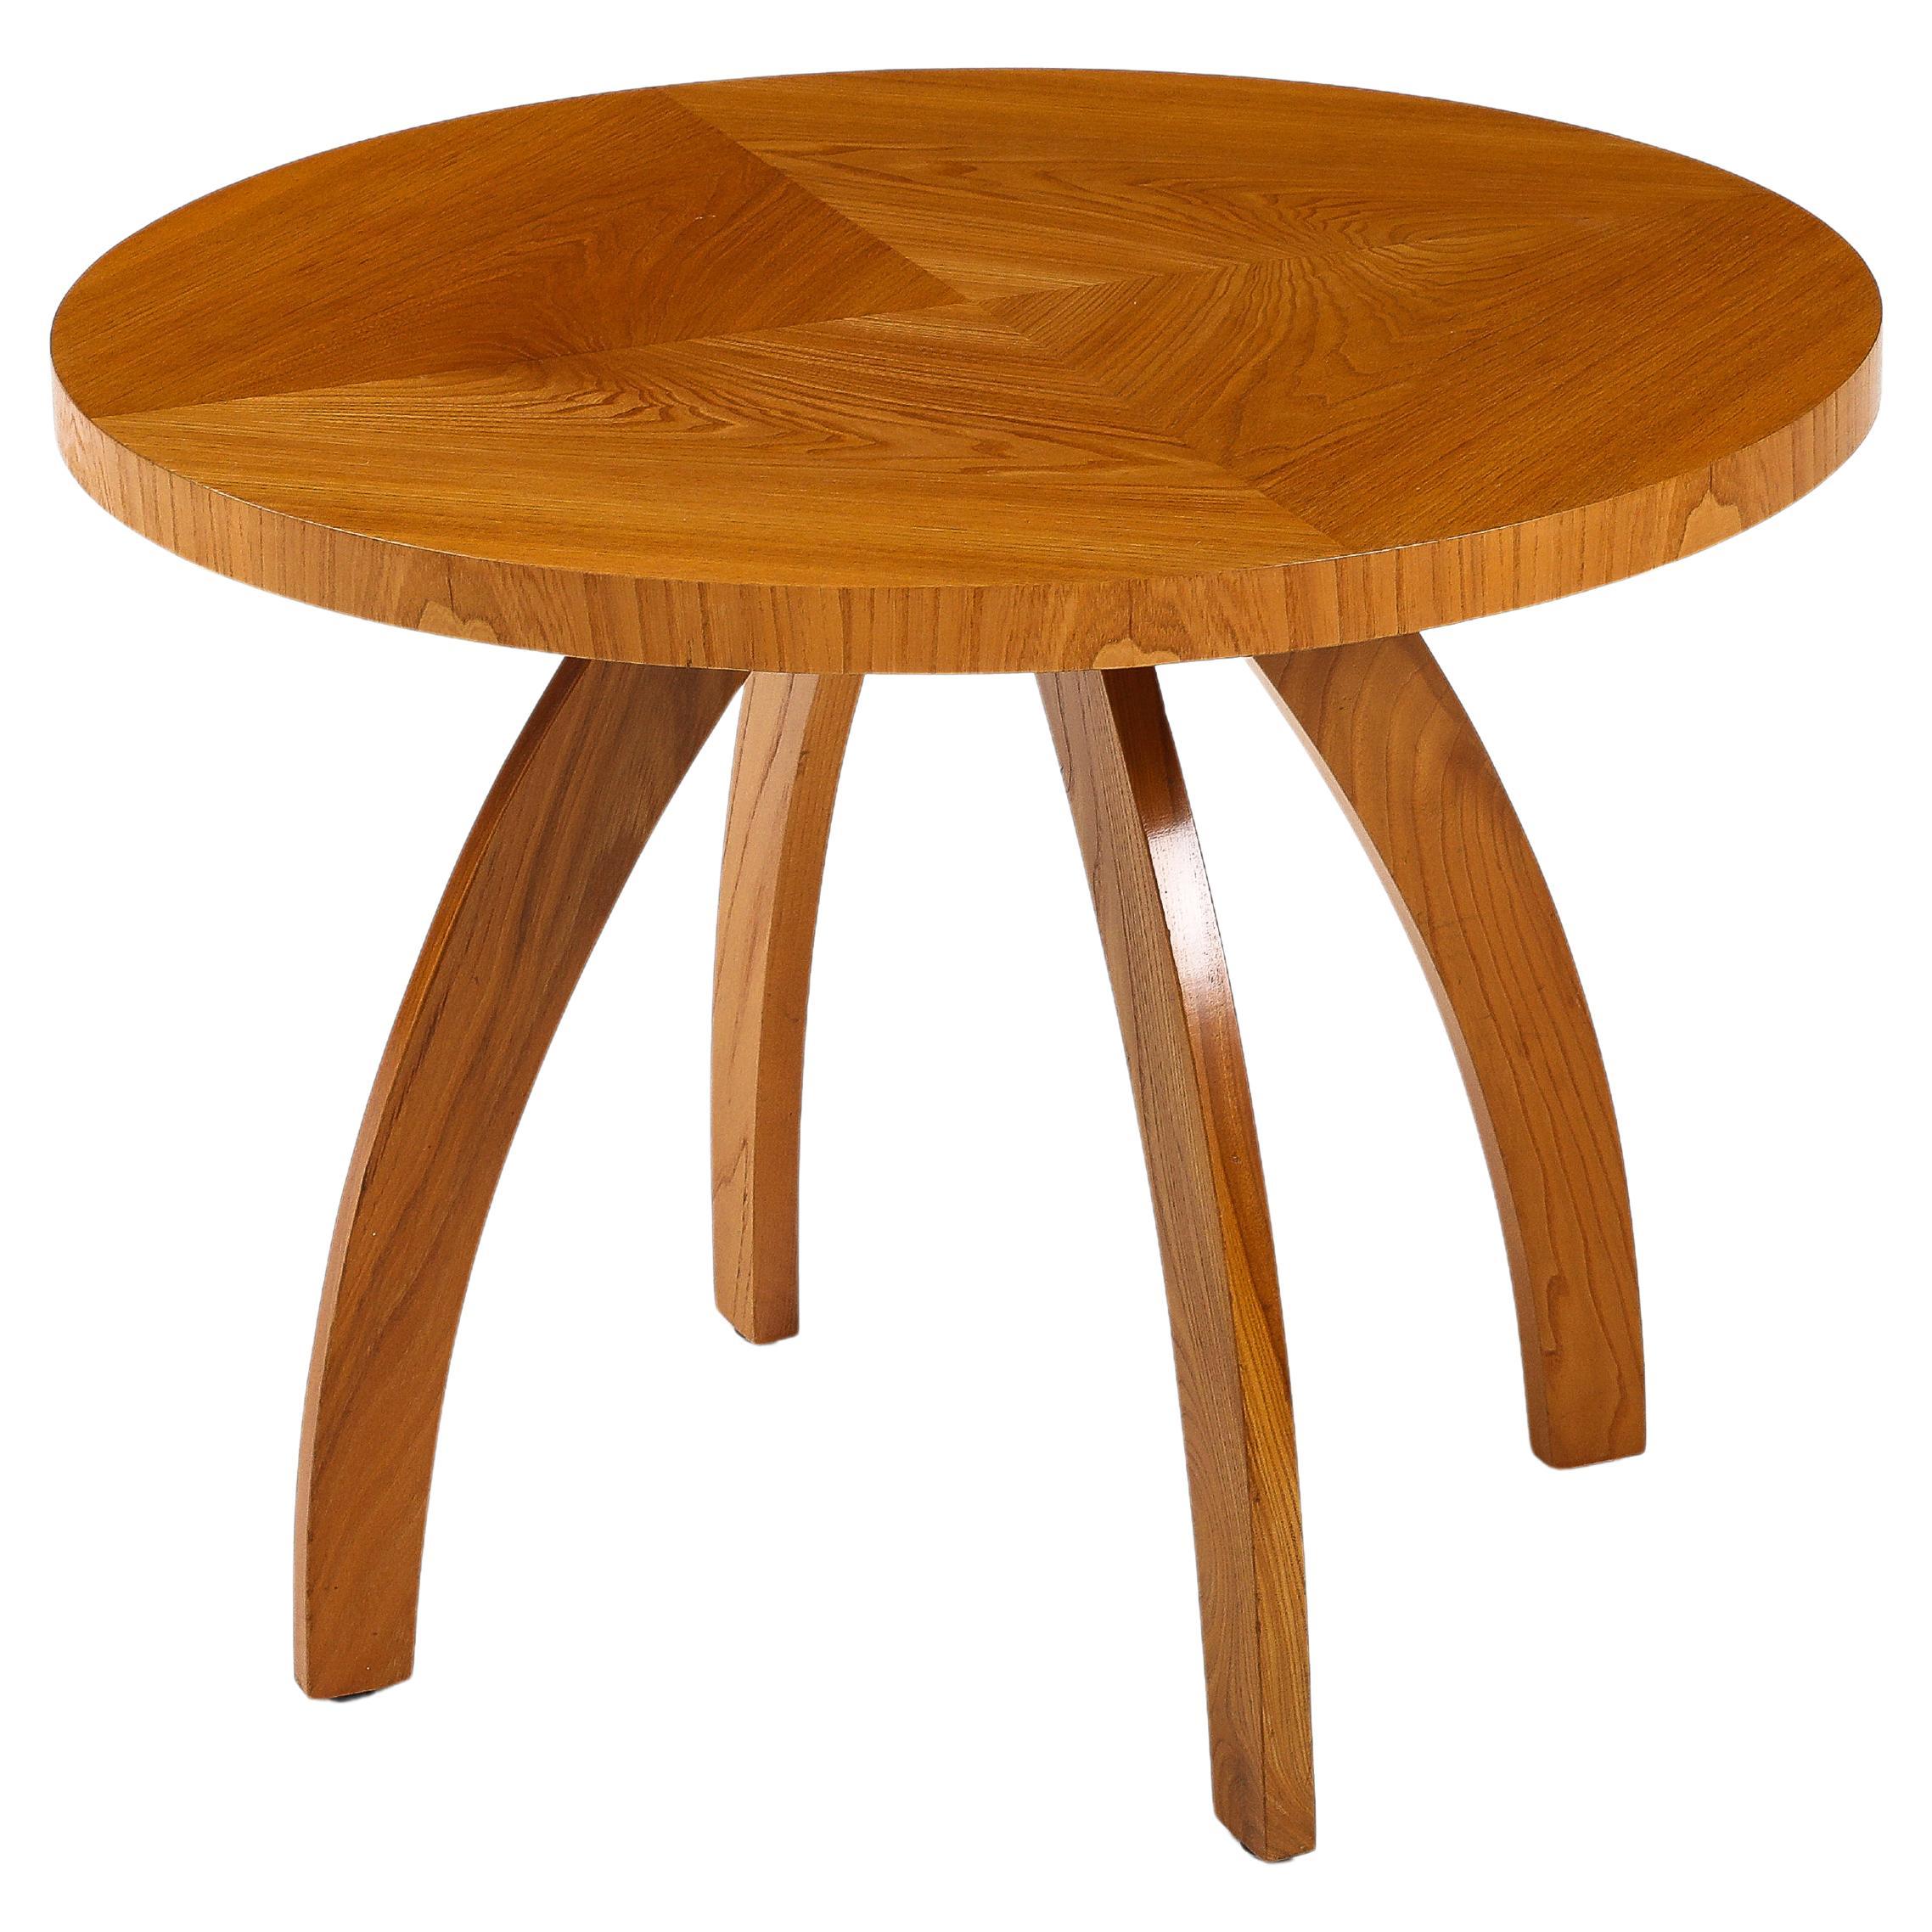 A Swedish Modern Elmwood Side Table, Circa 1940s